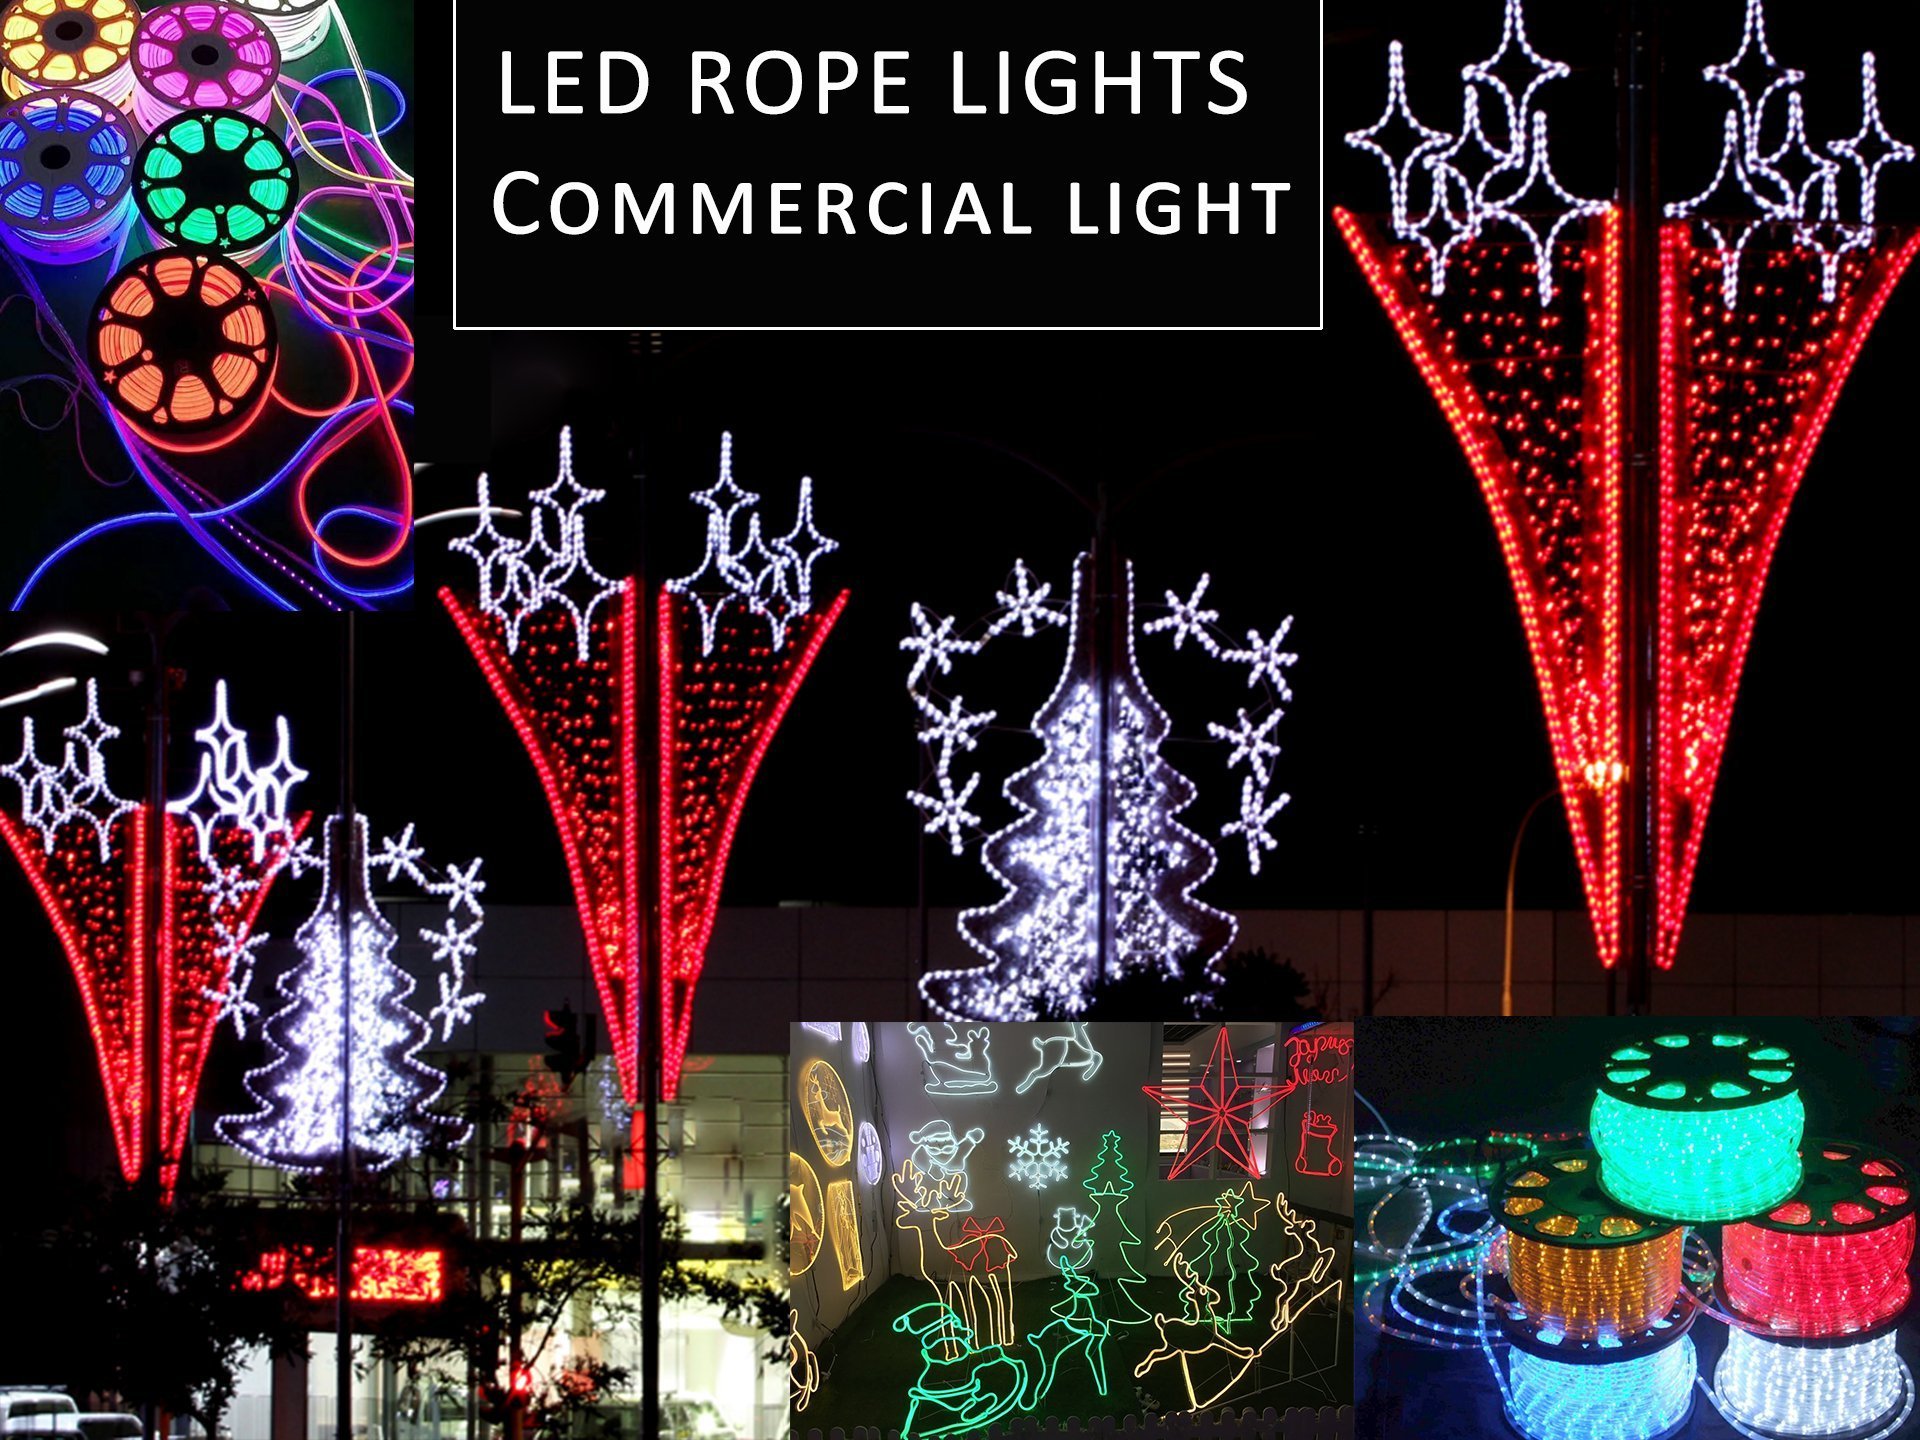 LED rope lights motif pole mounted Christmas decor